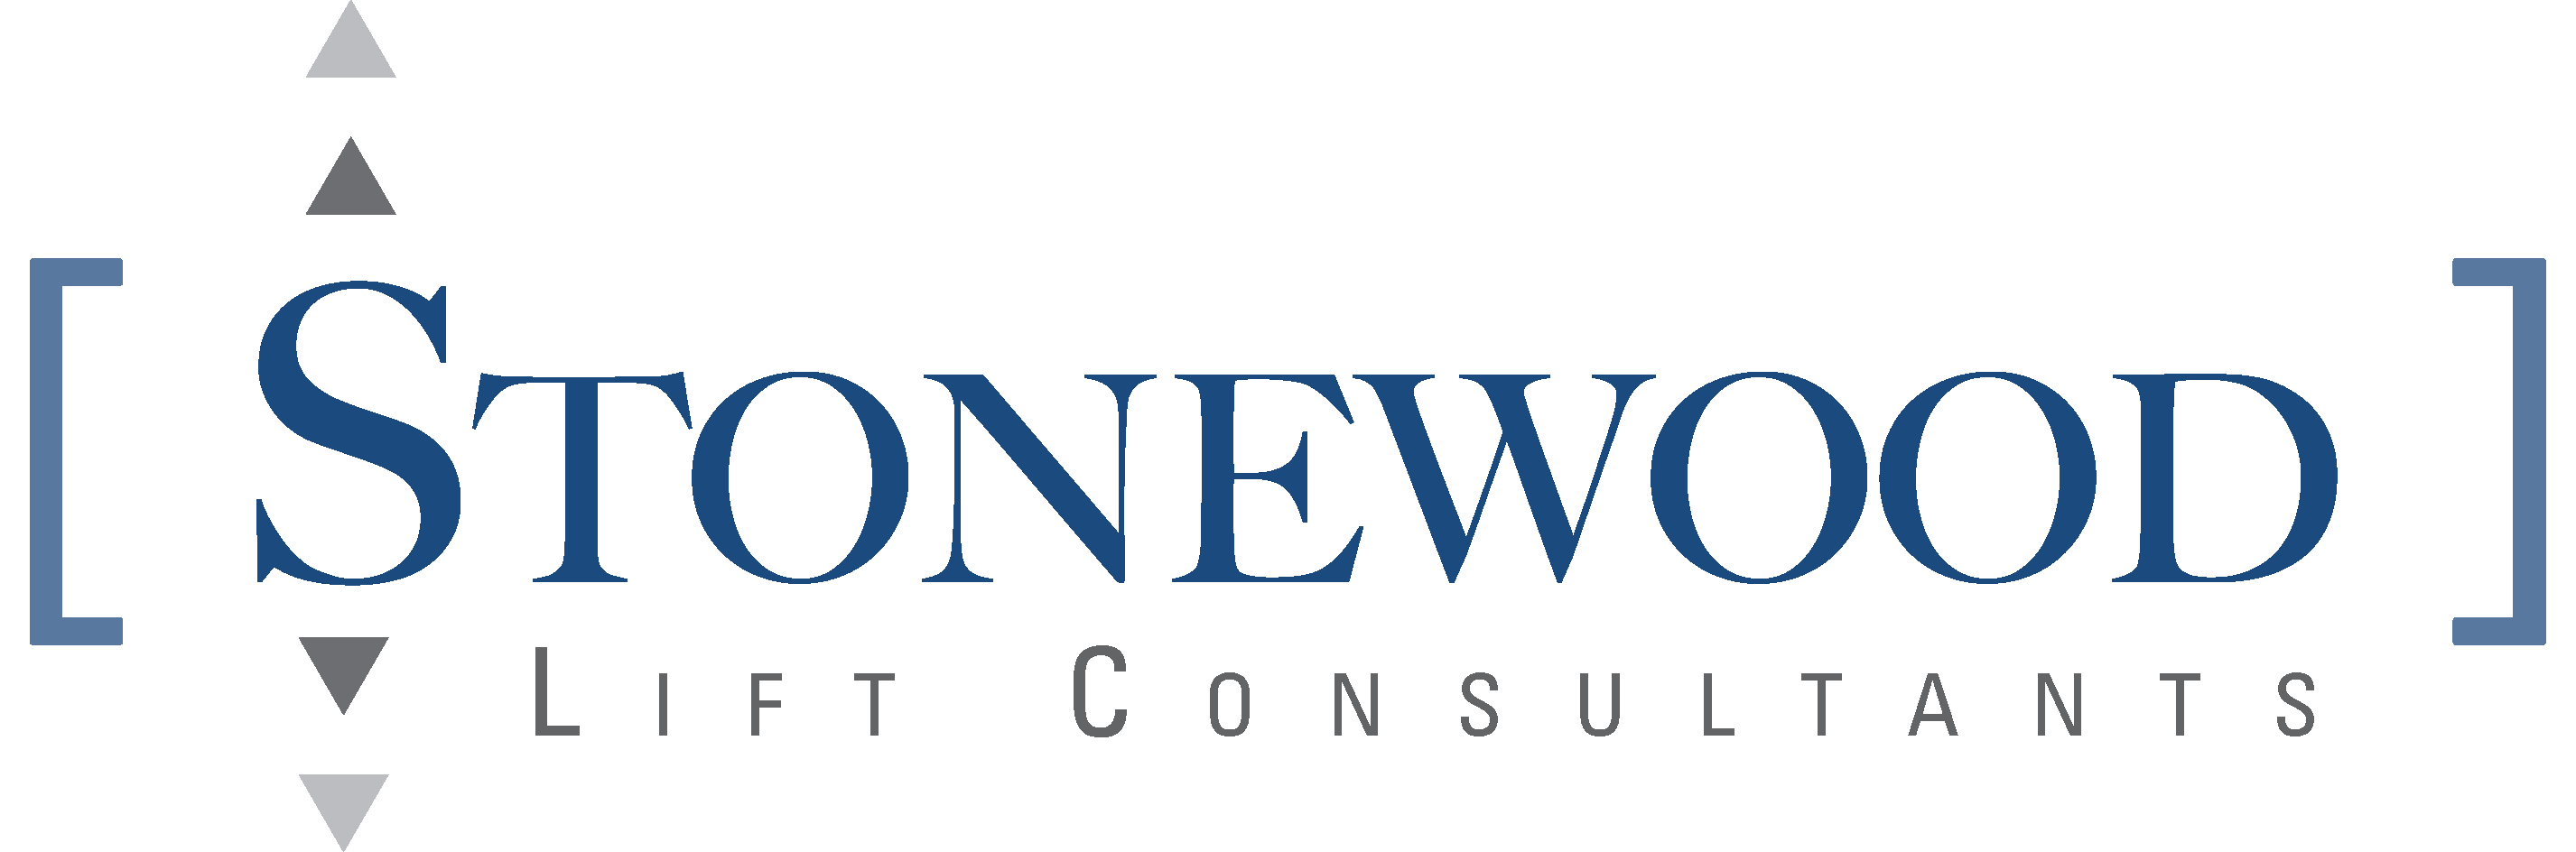 Stonewood Lift Consultants Ltd